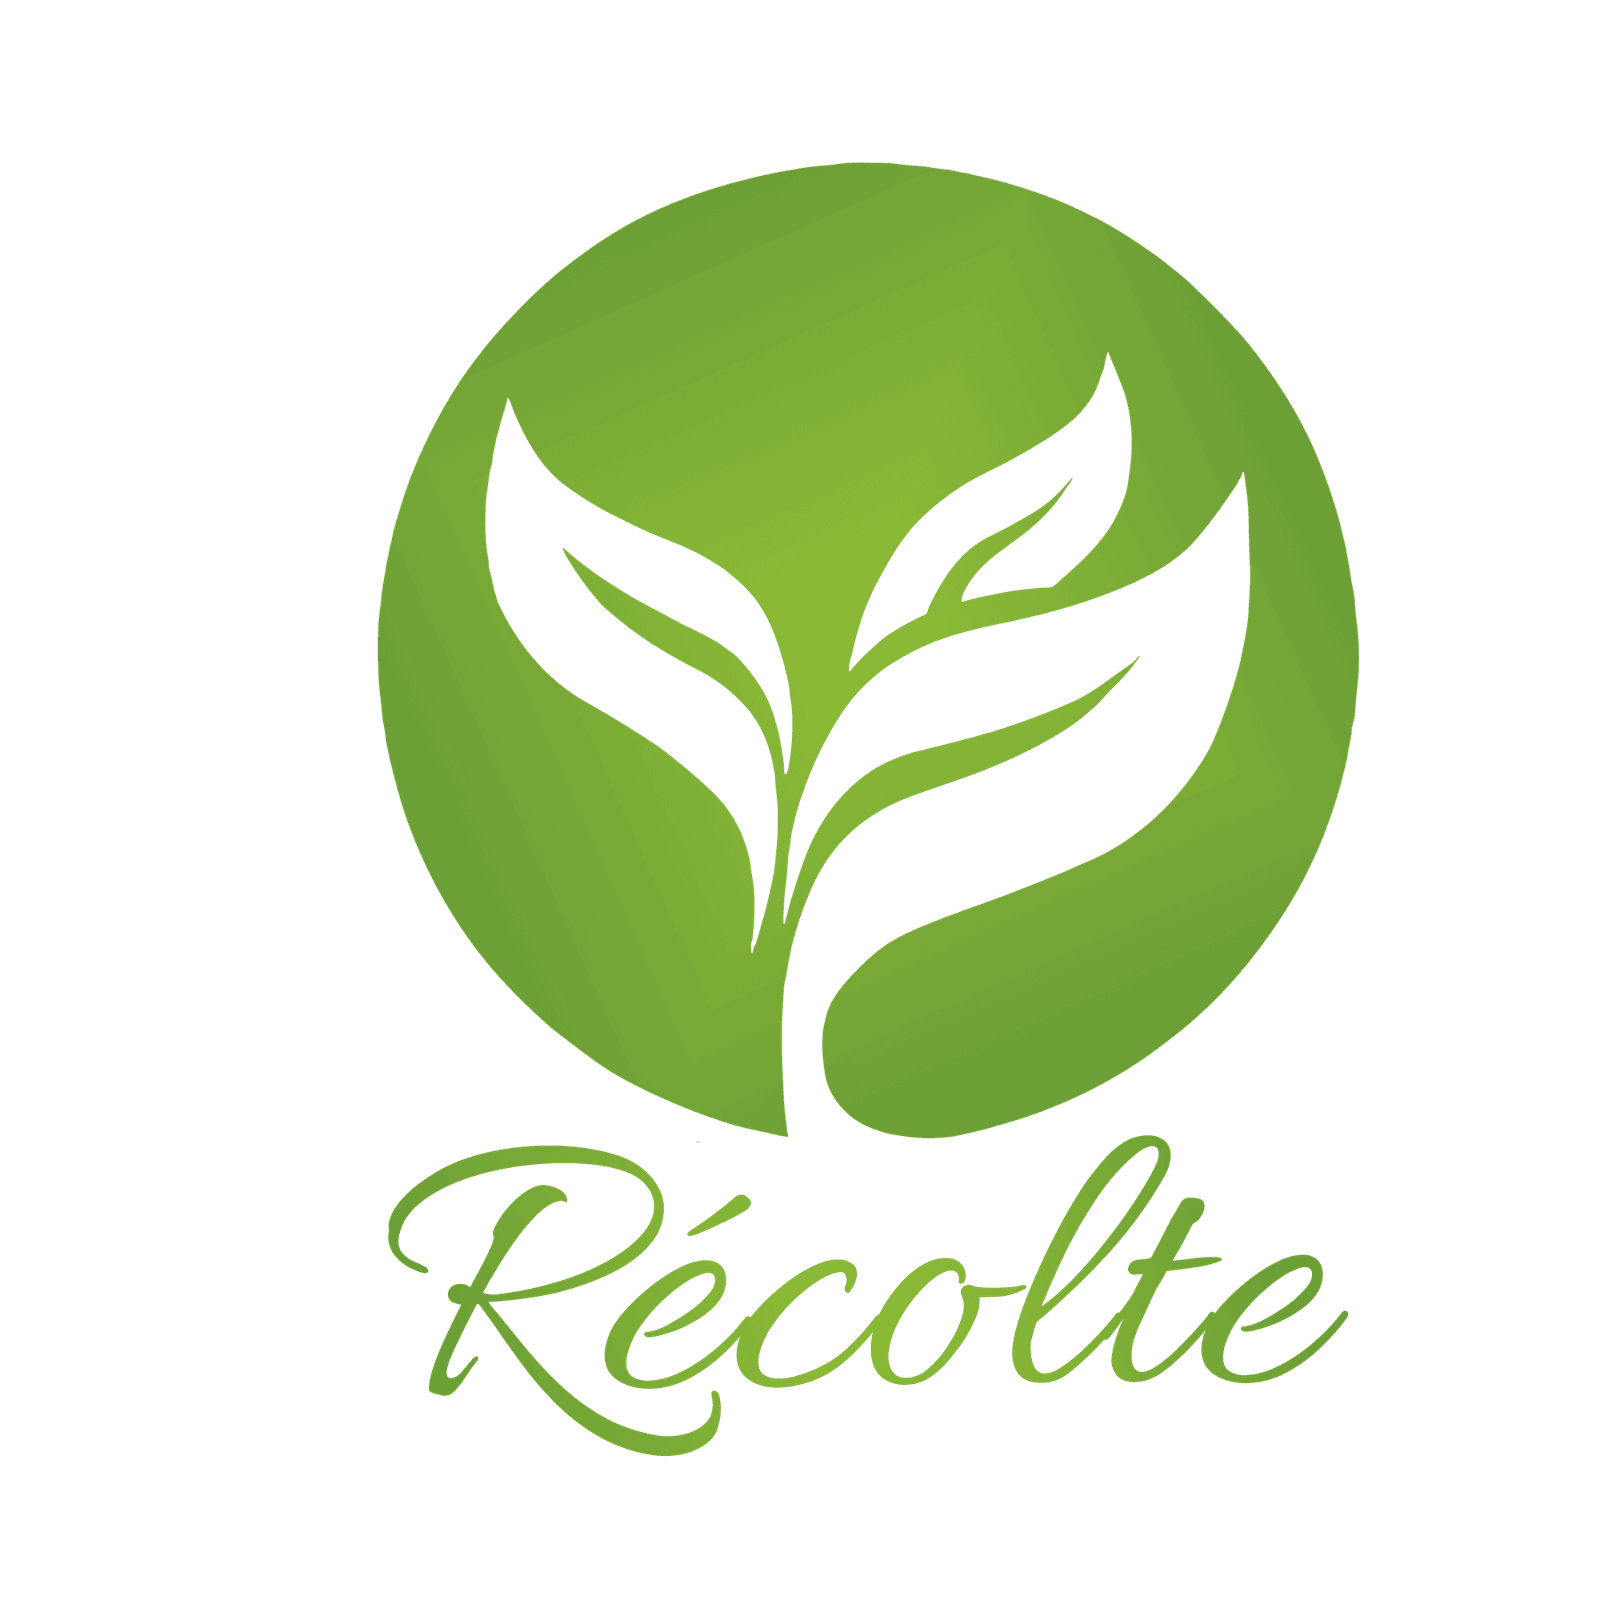 ECFI brand, Récolte